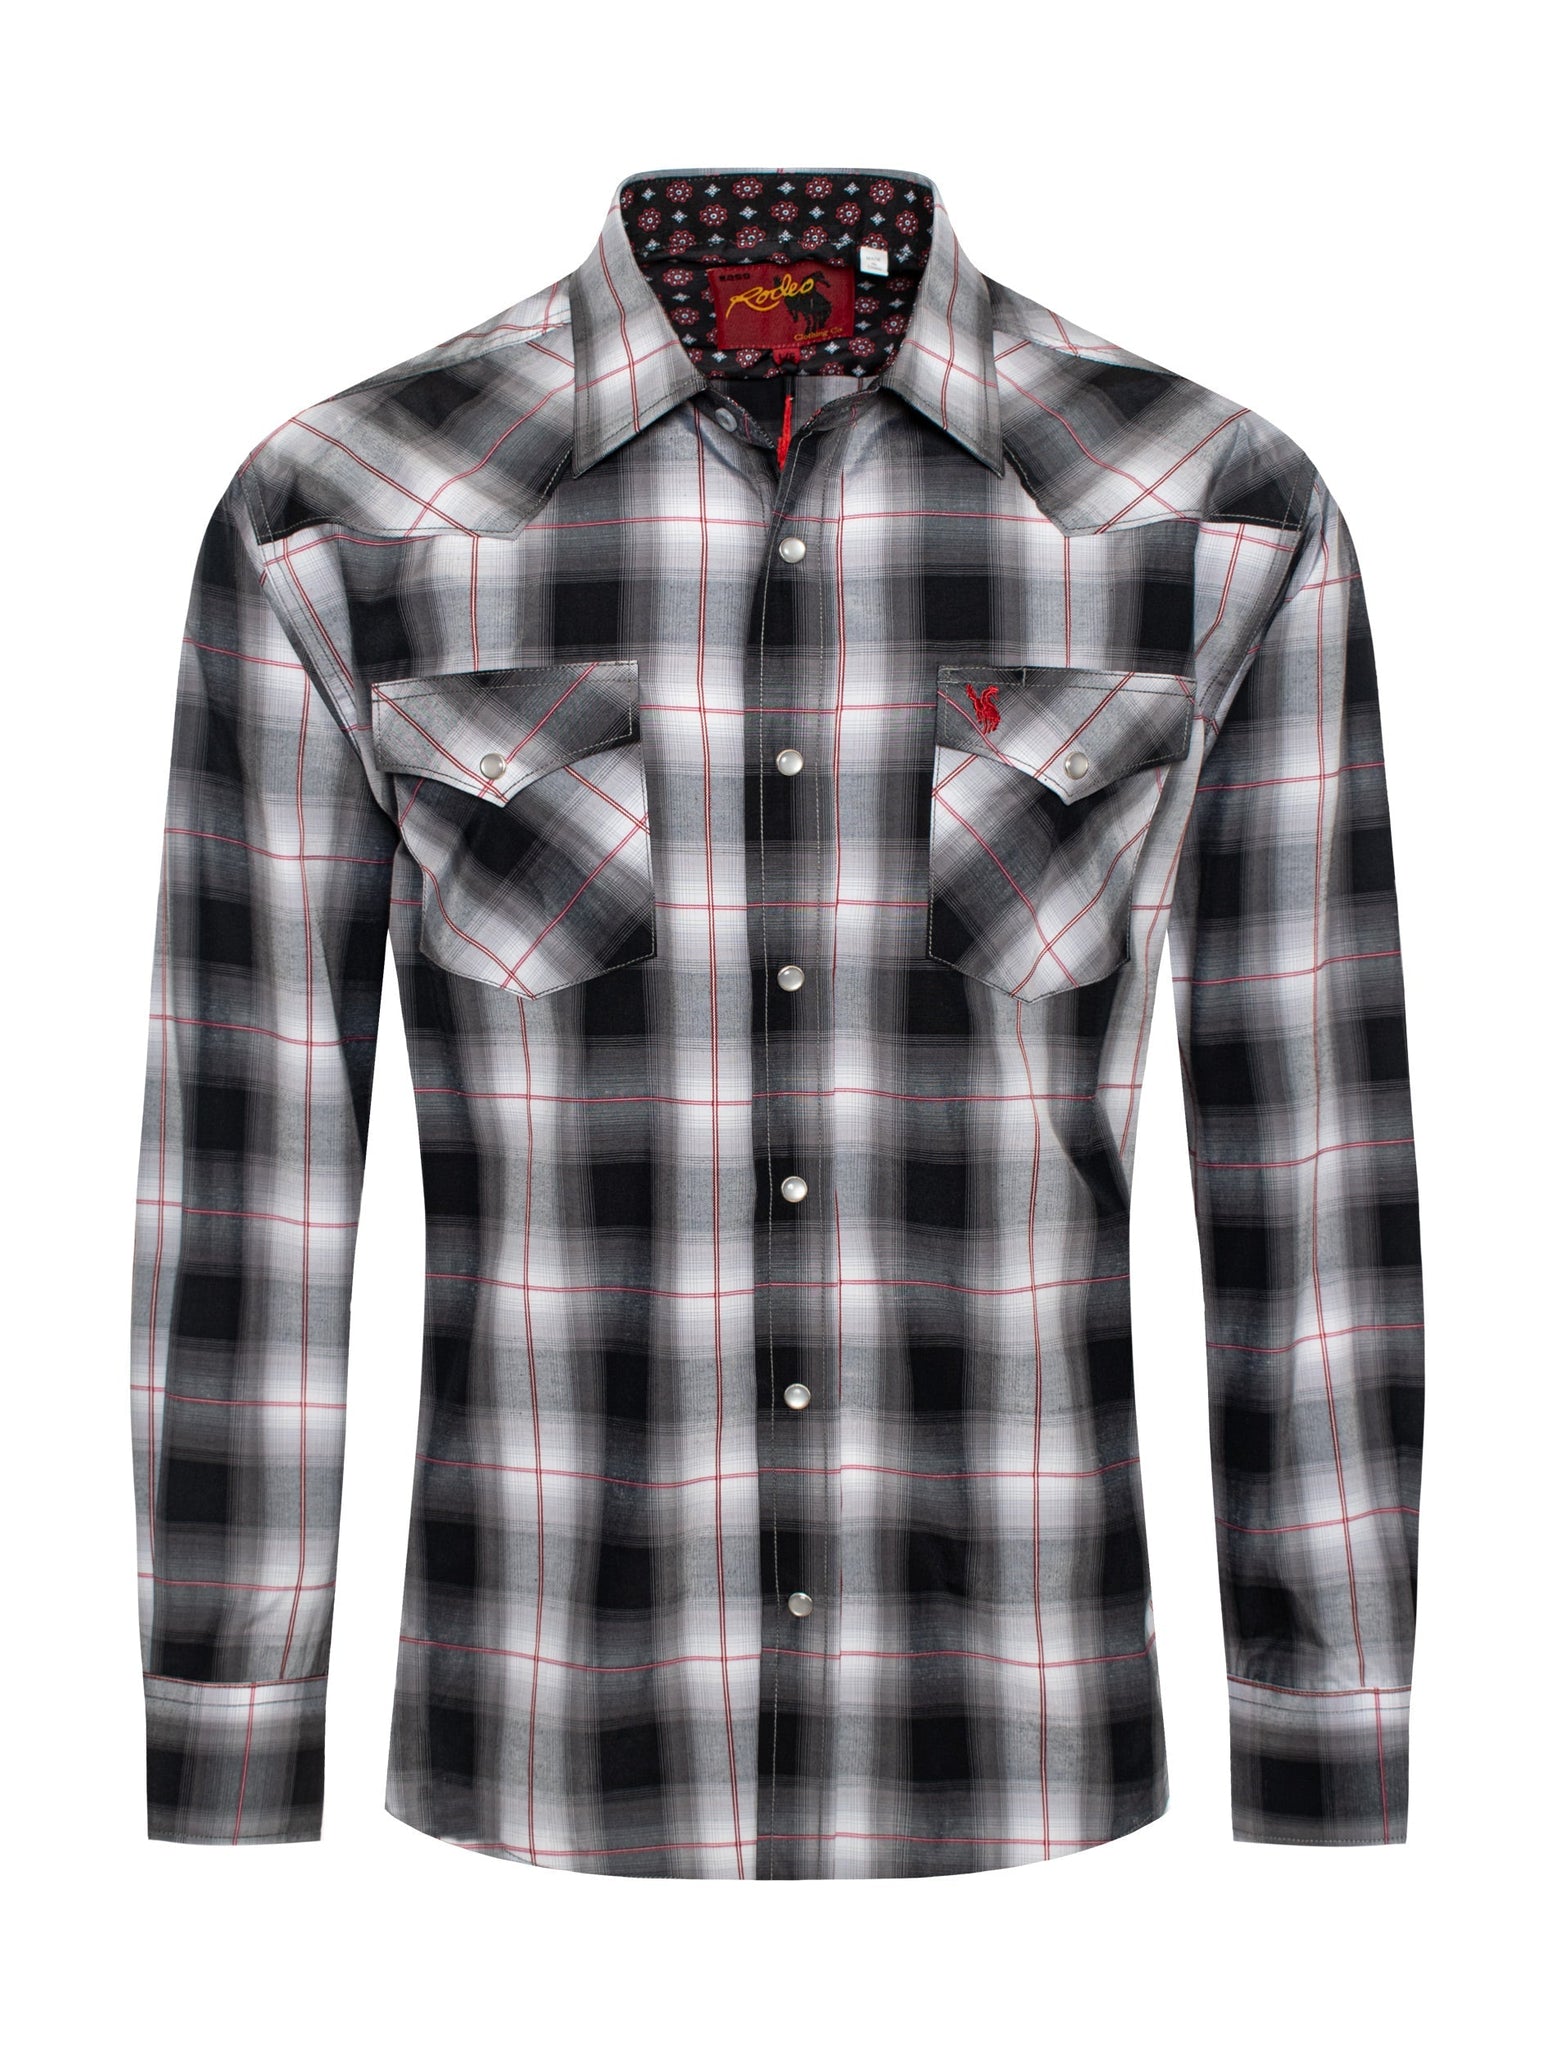 Men's Western Long Sleeve Pearl Snap Plaid Shirt -PS400-415